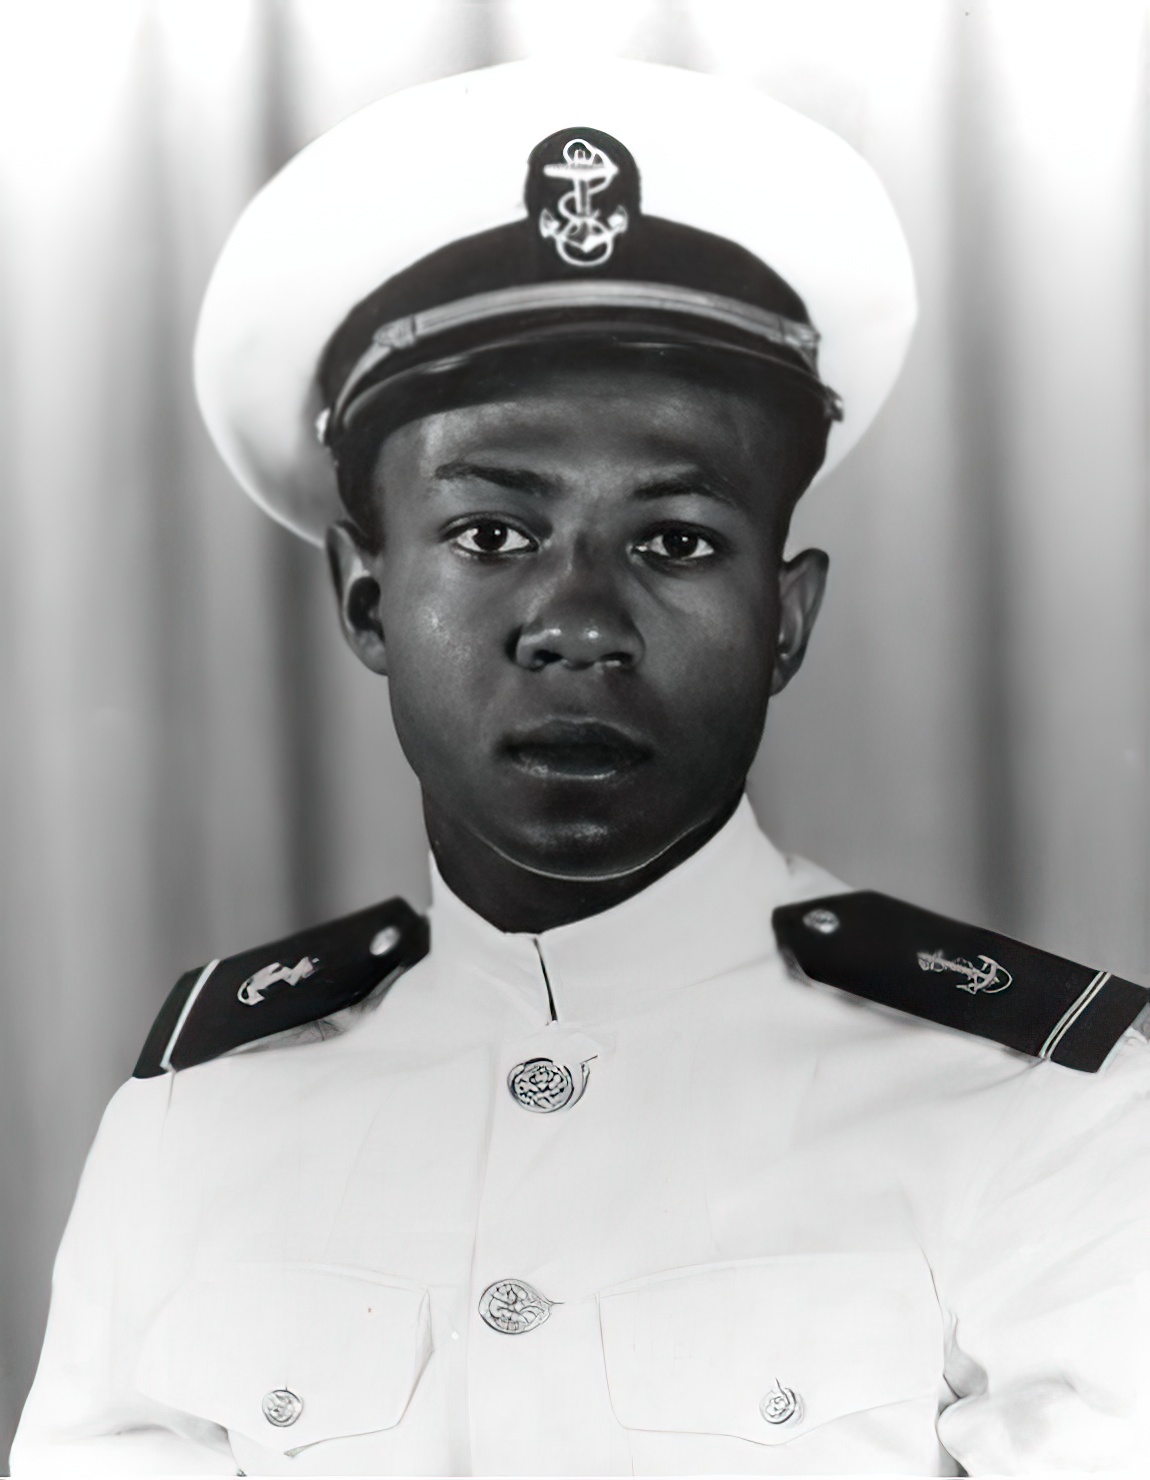 Midshipman Jesse L. Brown, USN Photographed at Naval Air Station, Jacksonville, Florida, October 1948, while serving as a Naval Aviation Cadet